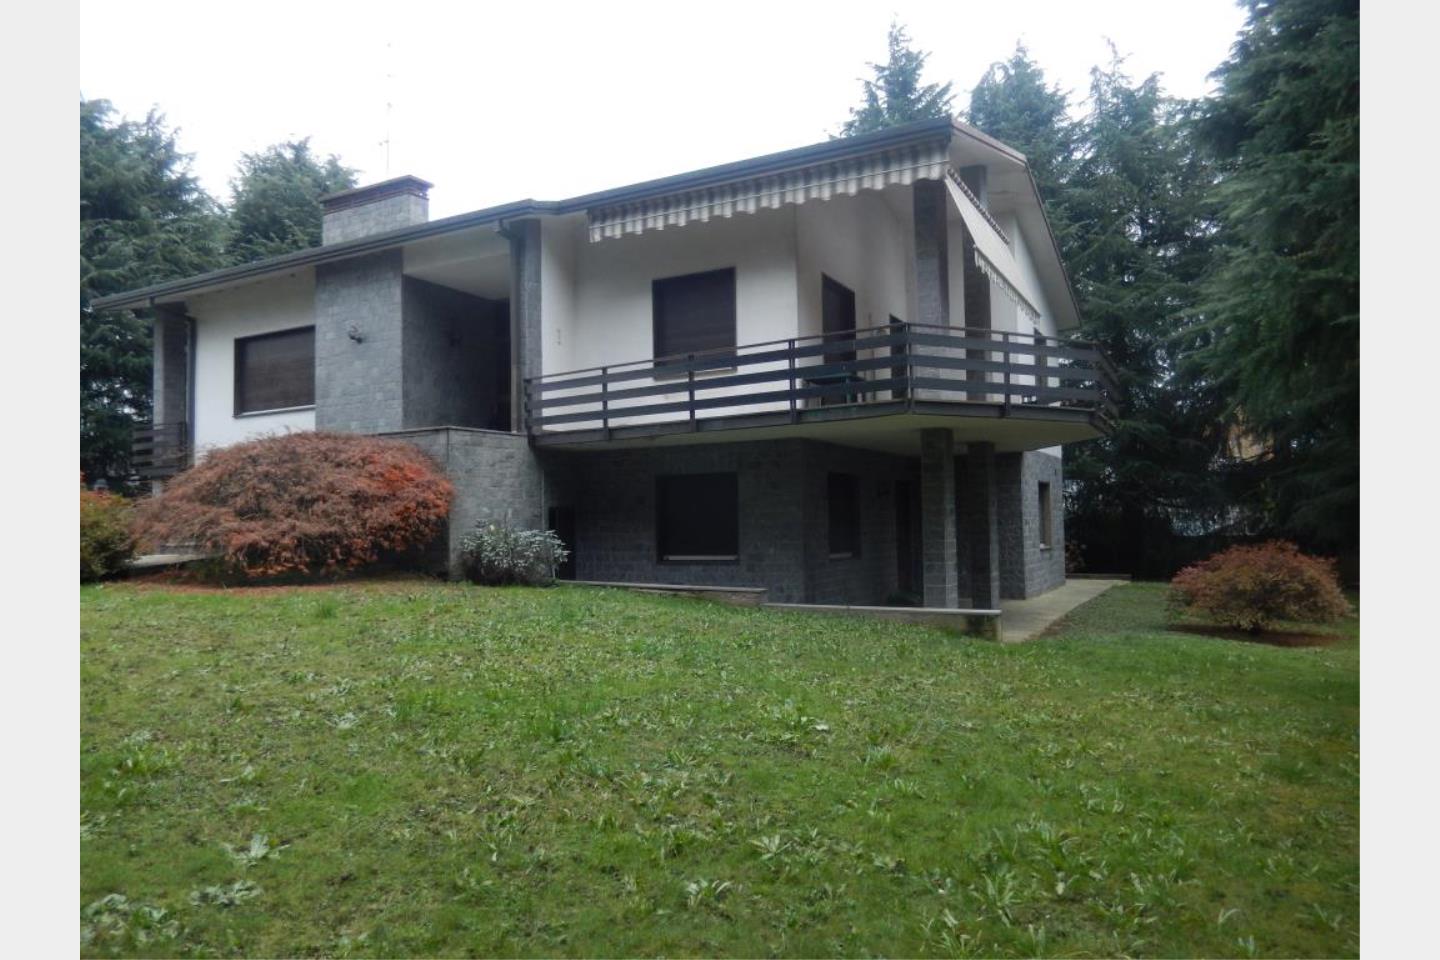 Villa in Vendita Bulgarograsso